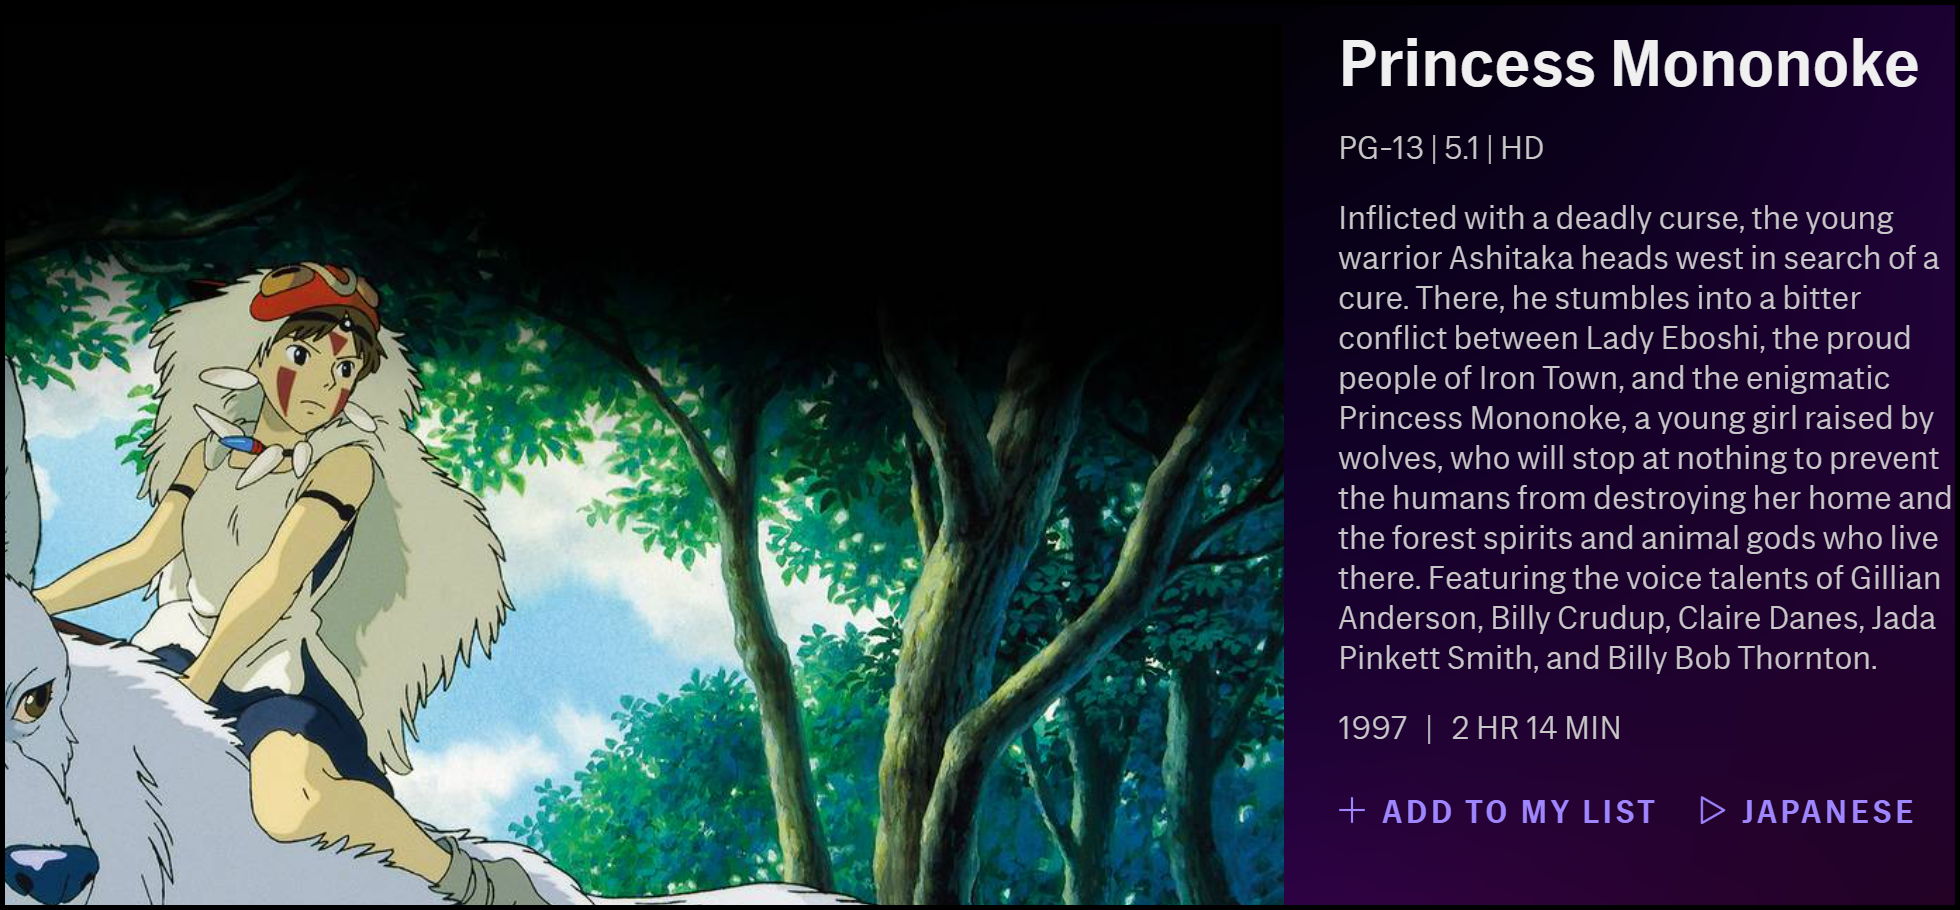 The description of Princess Mononoke on HBO Max.